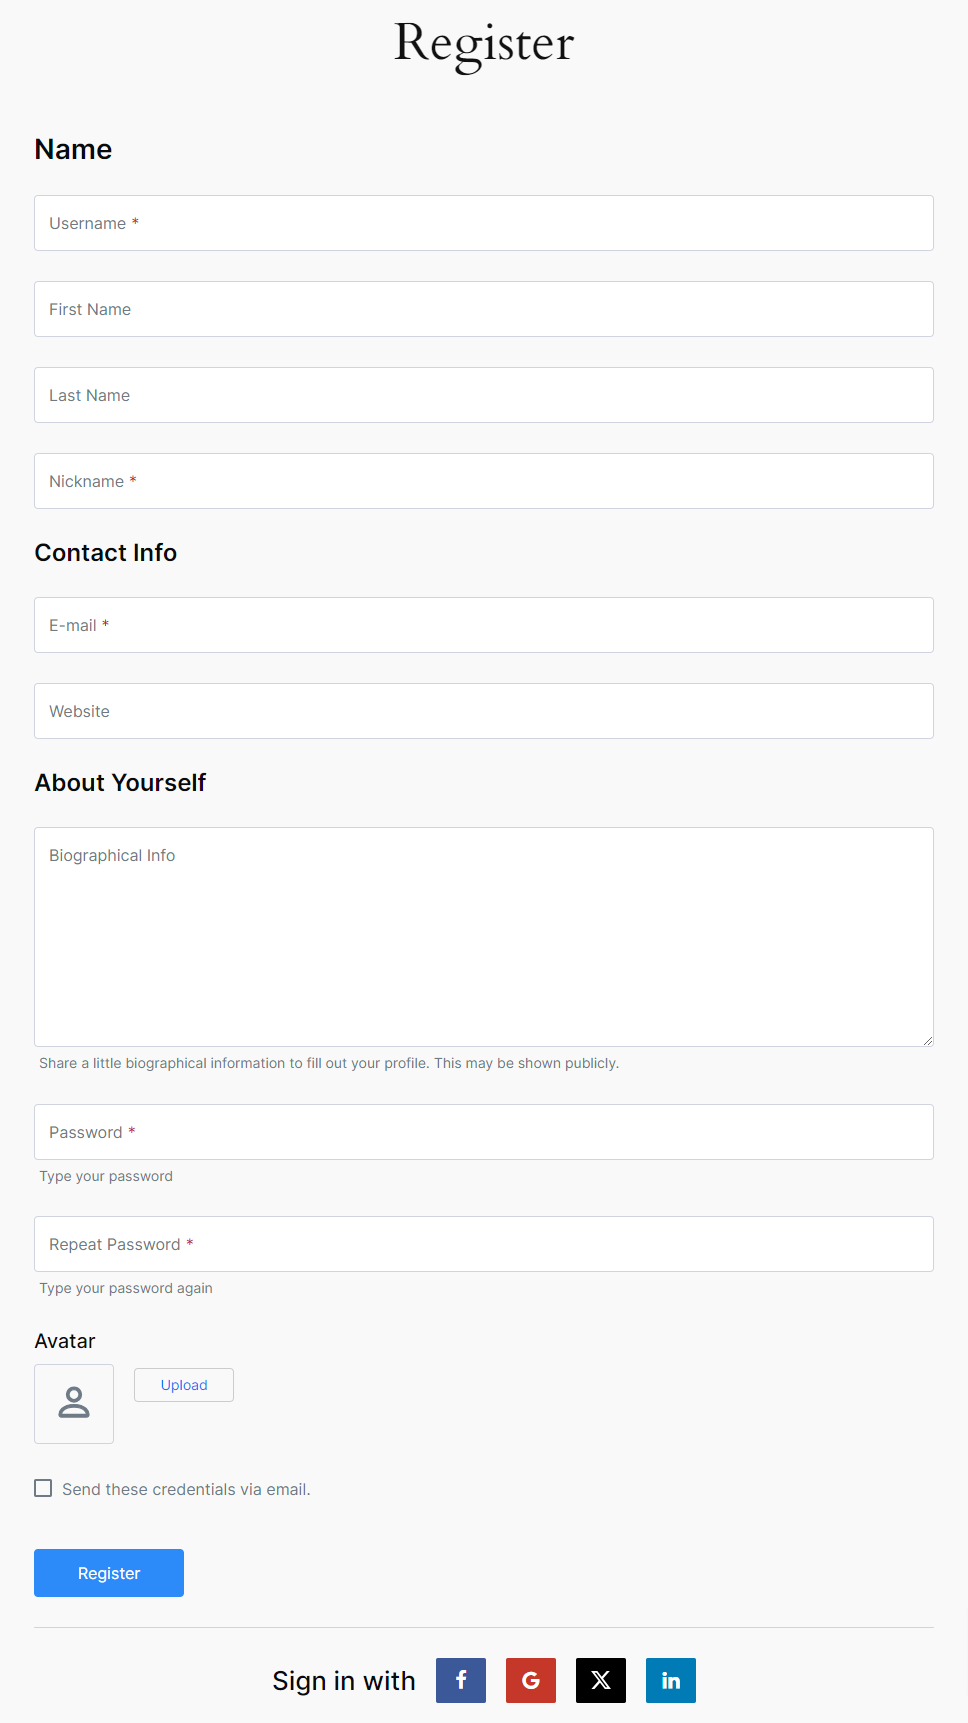 Profile Builder Pro - Social Connect - General Settings - Register Form